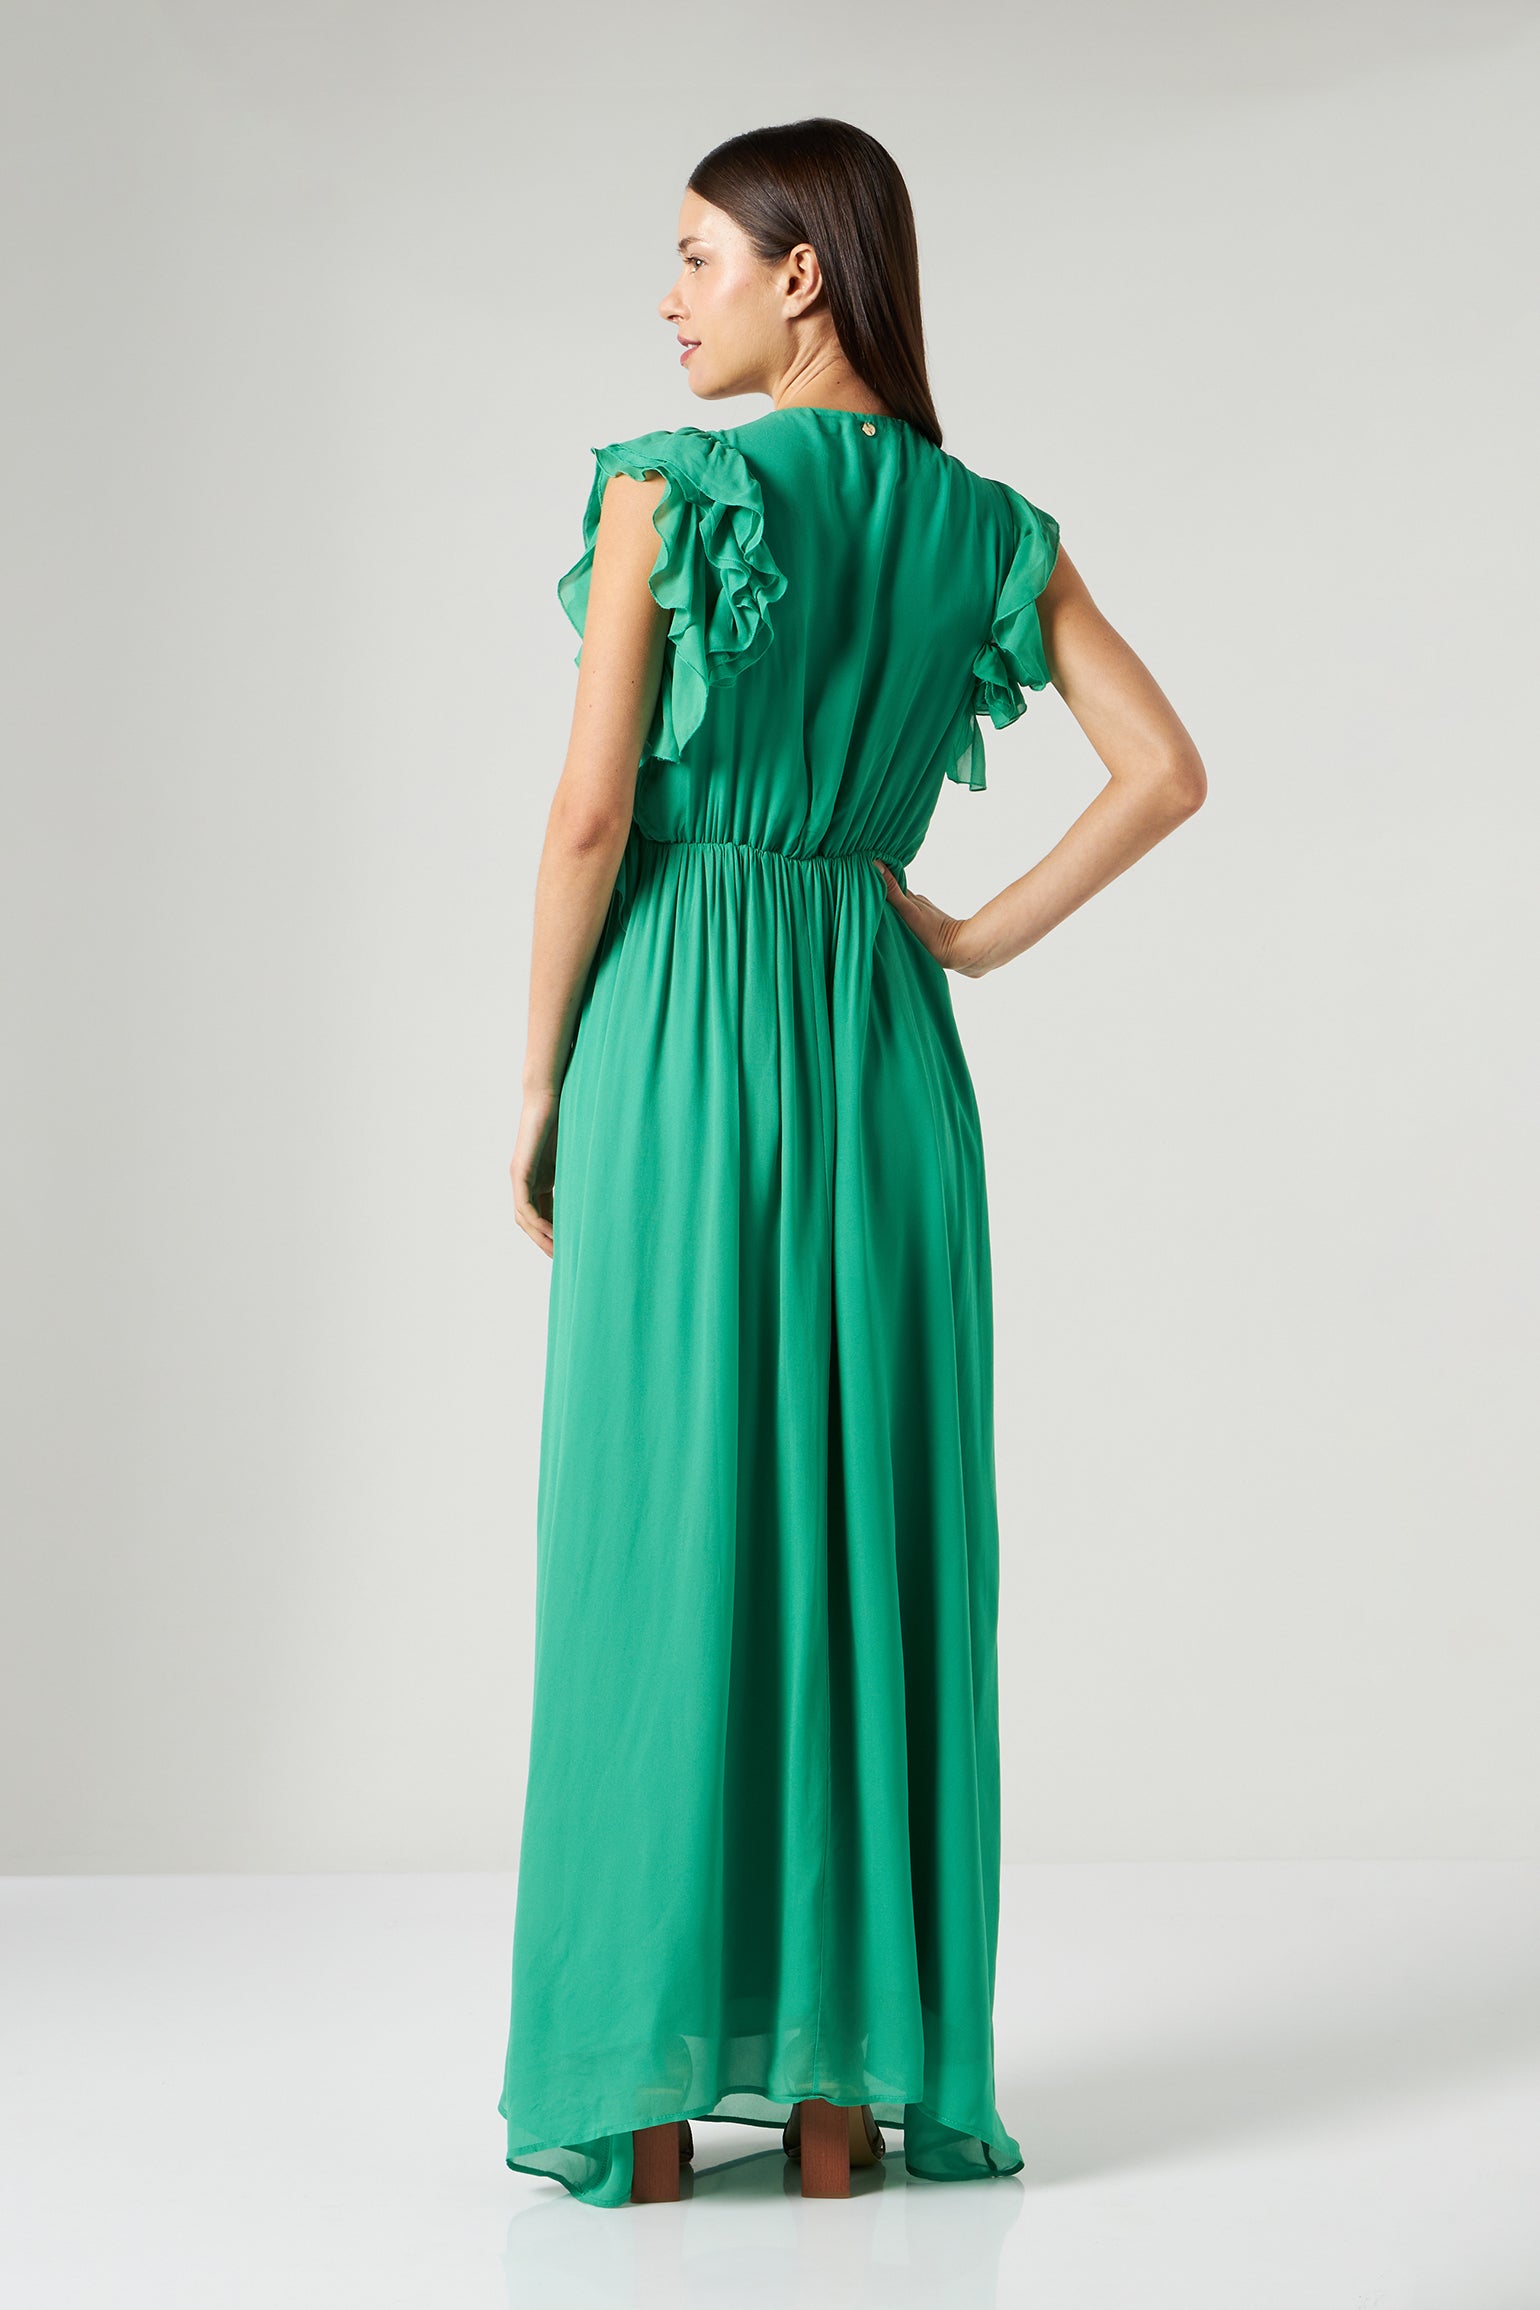 LIU JO Long Emerald Green Dress